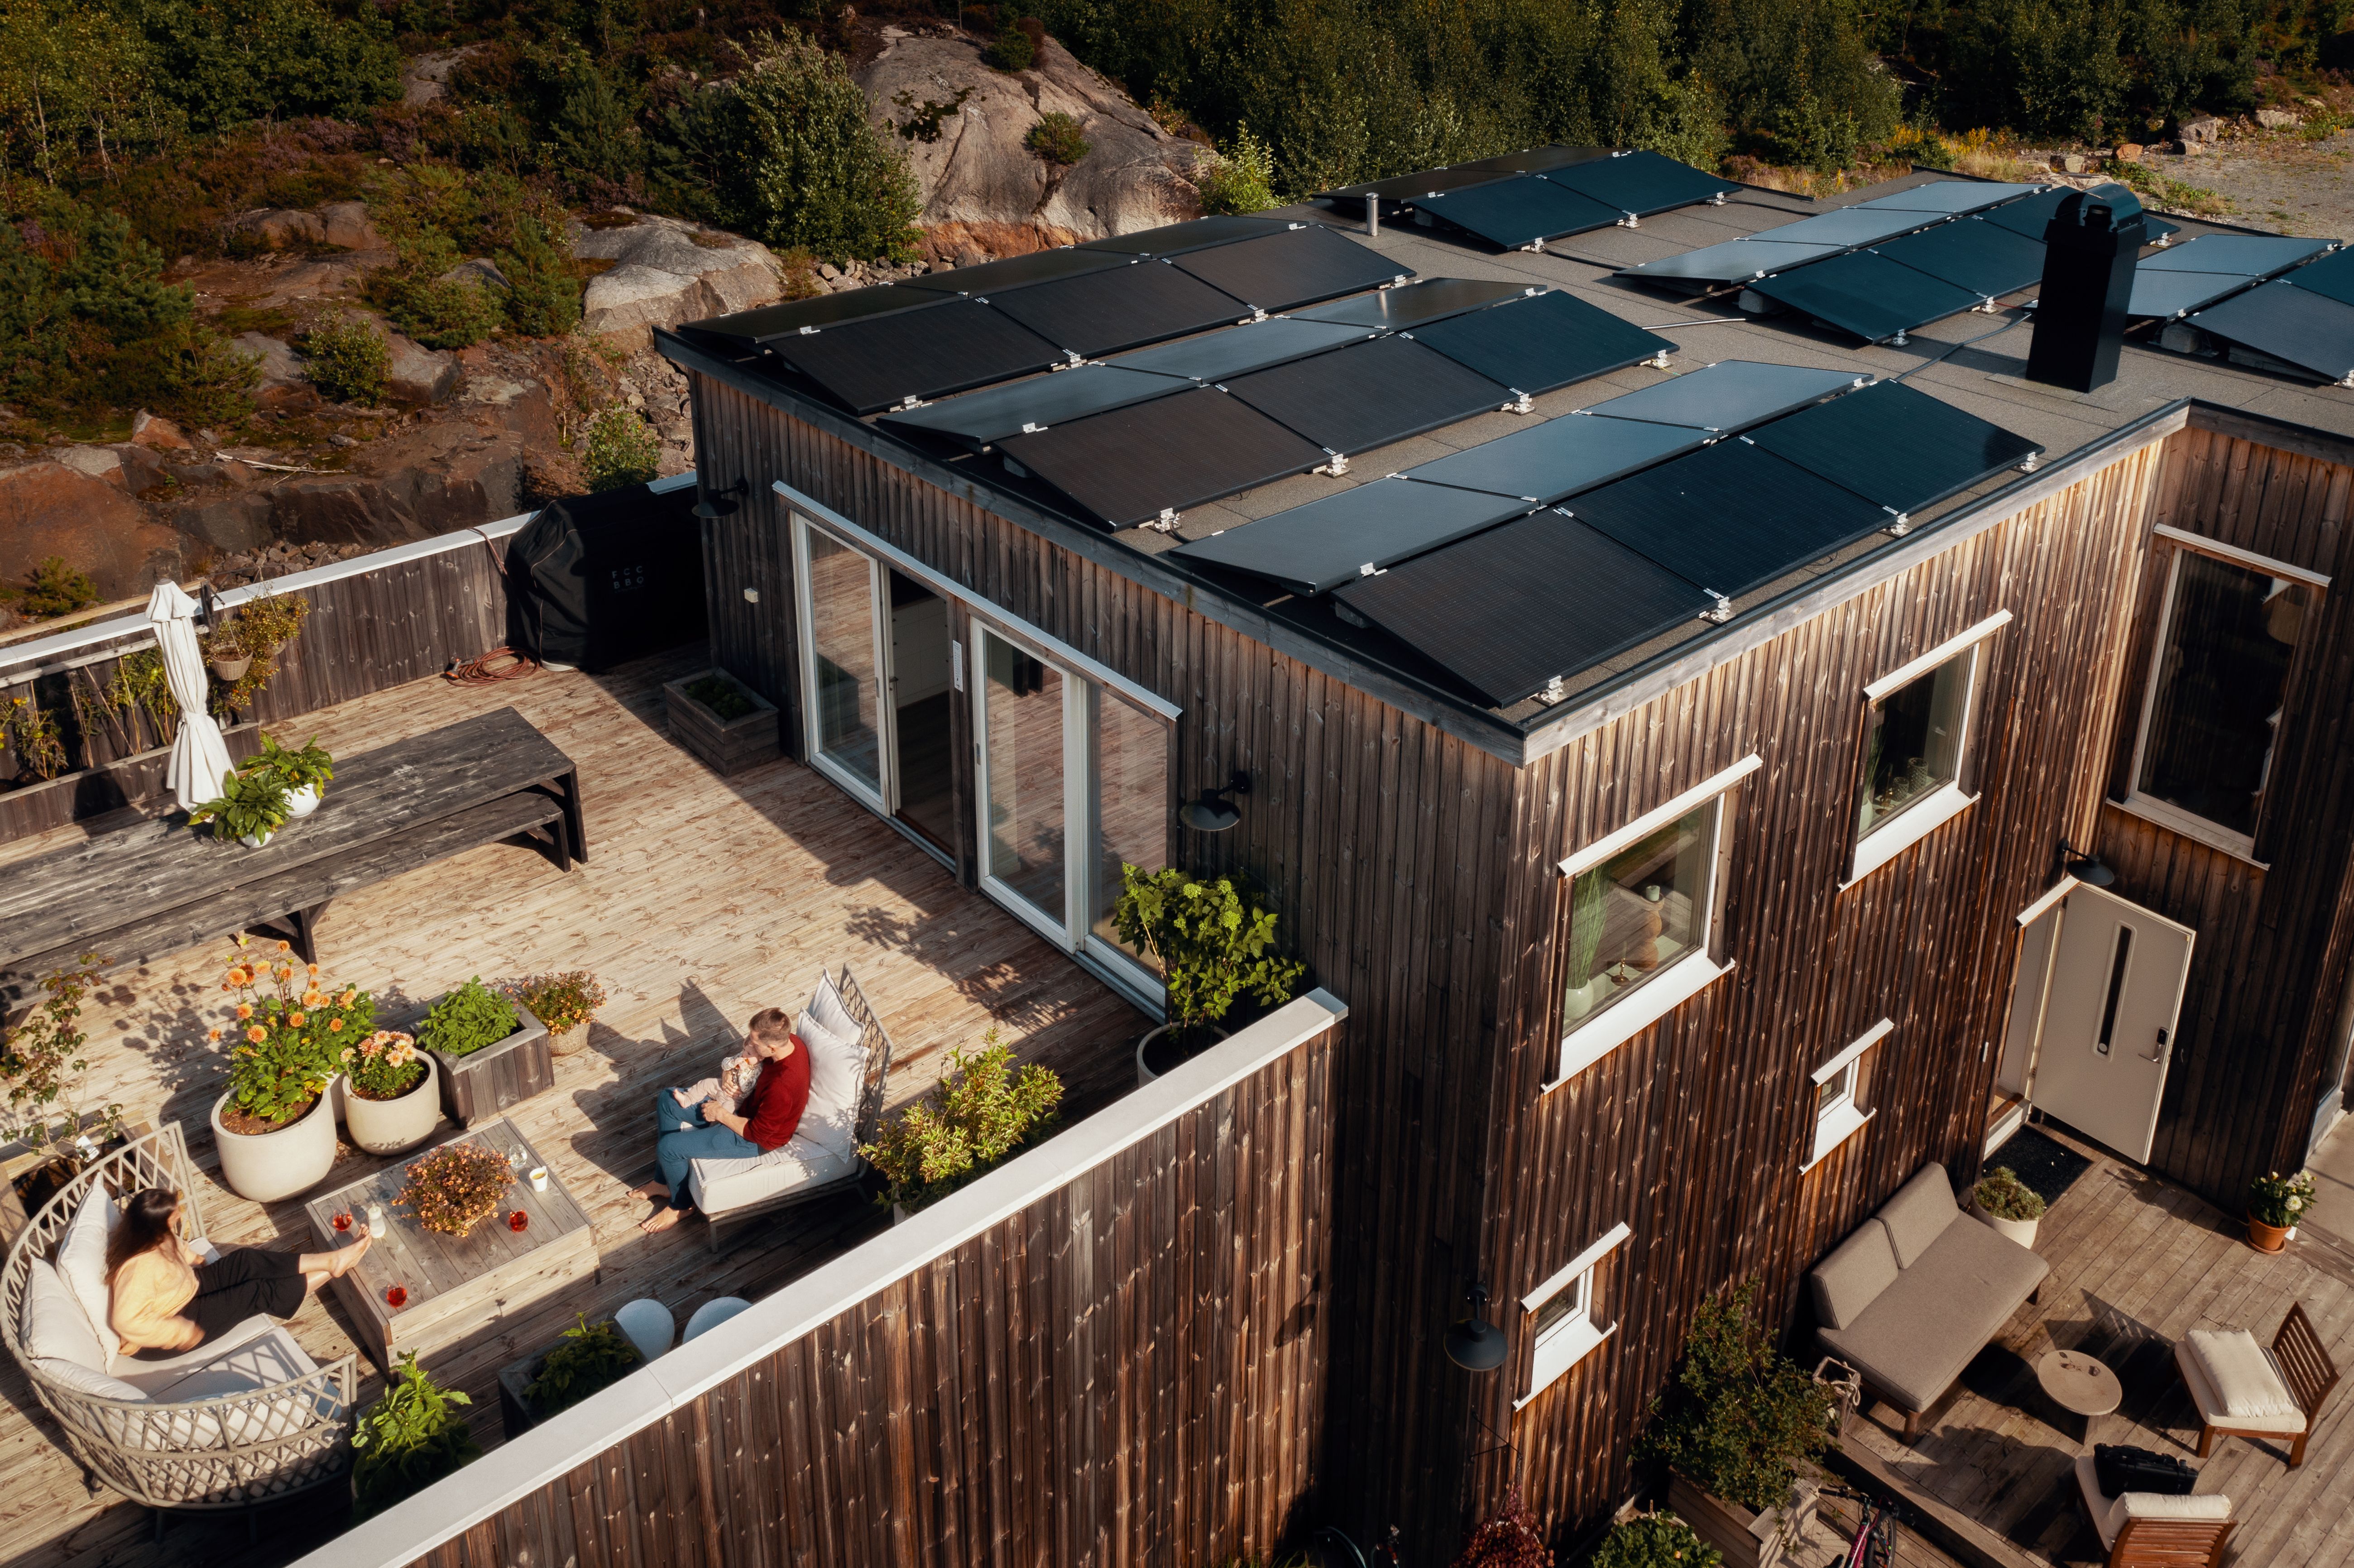 Moderne hus med solceller og beboere på balkongen.